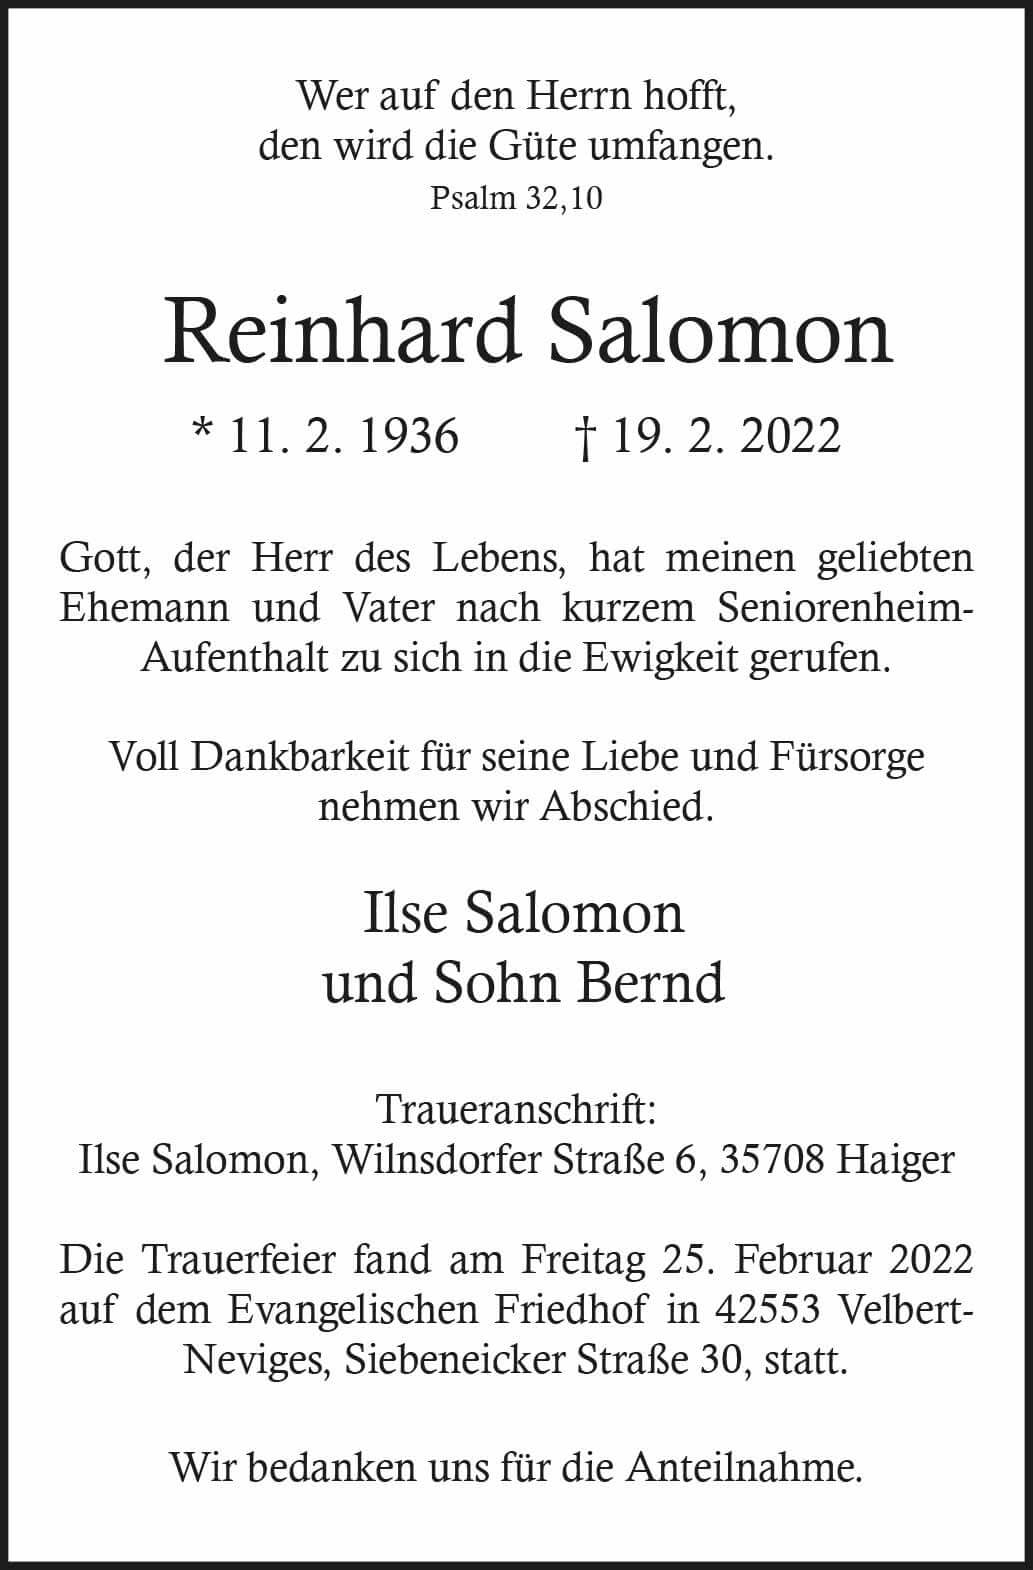 Reinhard Salomon † 19. 2. 2022